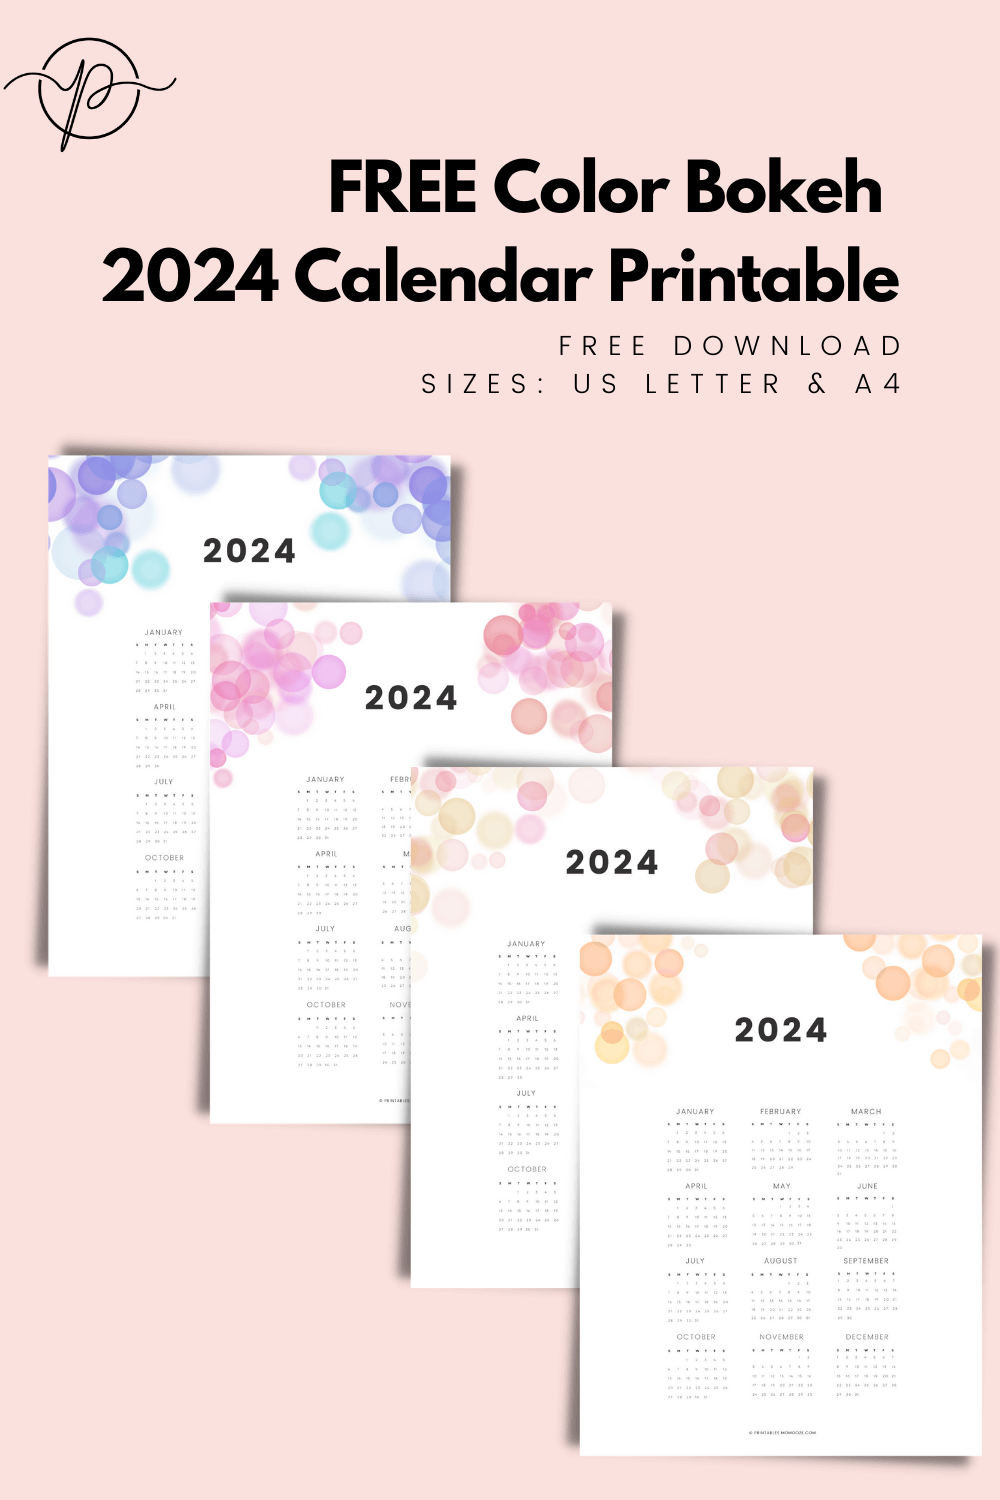 FREE 2024 Calendar Printables 24 Gorgeous Designs - Free Printable 2024 Monthly Calendar Colorful